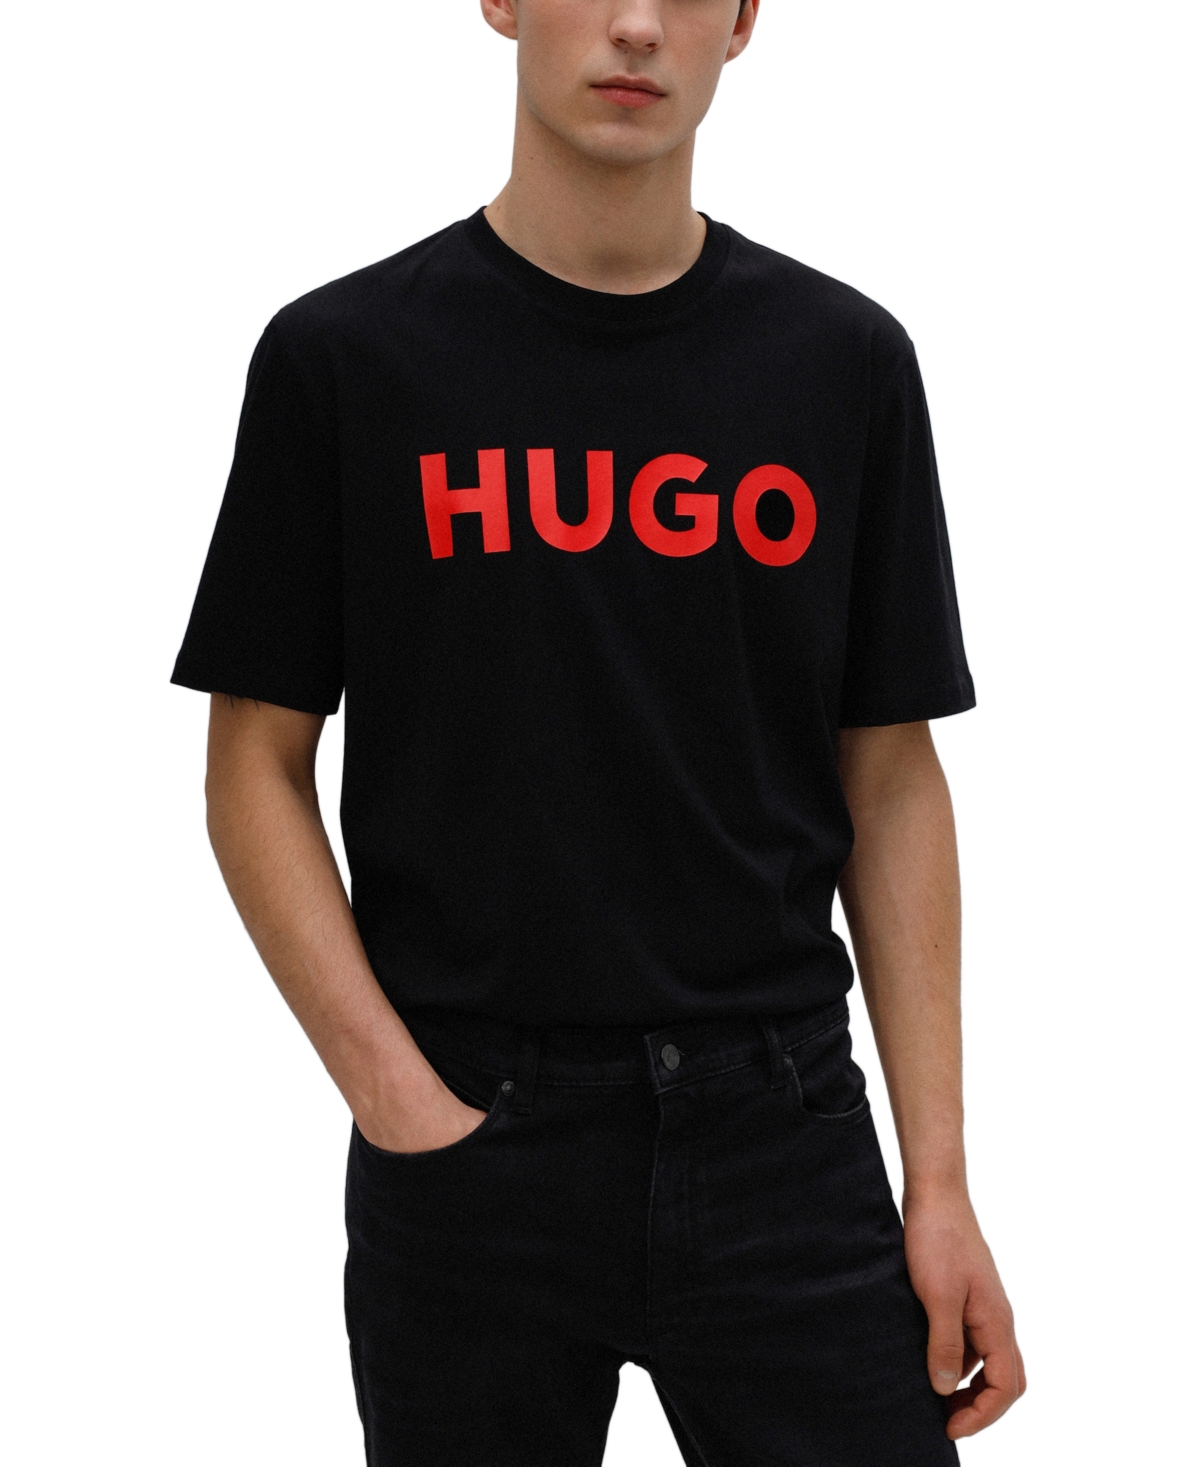 HUGO BY HUGO BOSS MEN'S DULIVIO LOGO T-SHIRT